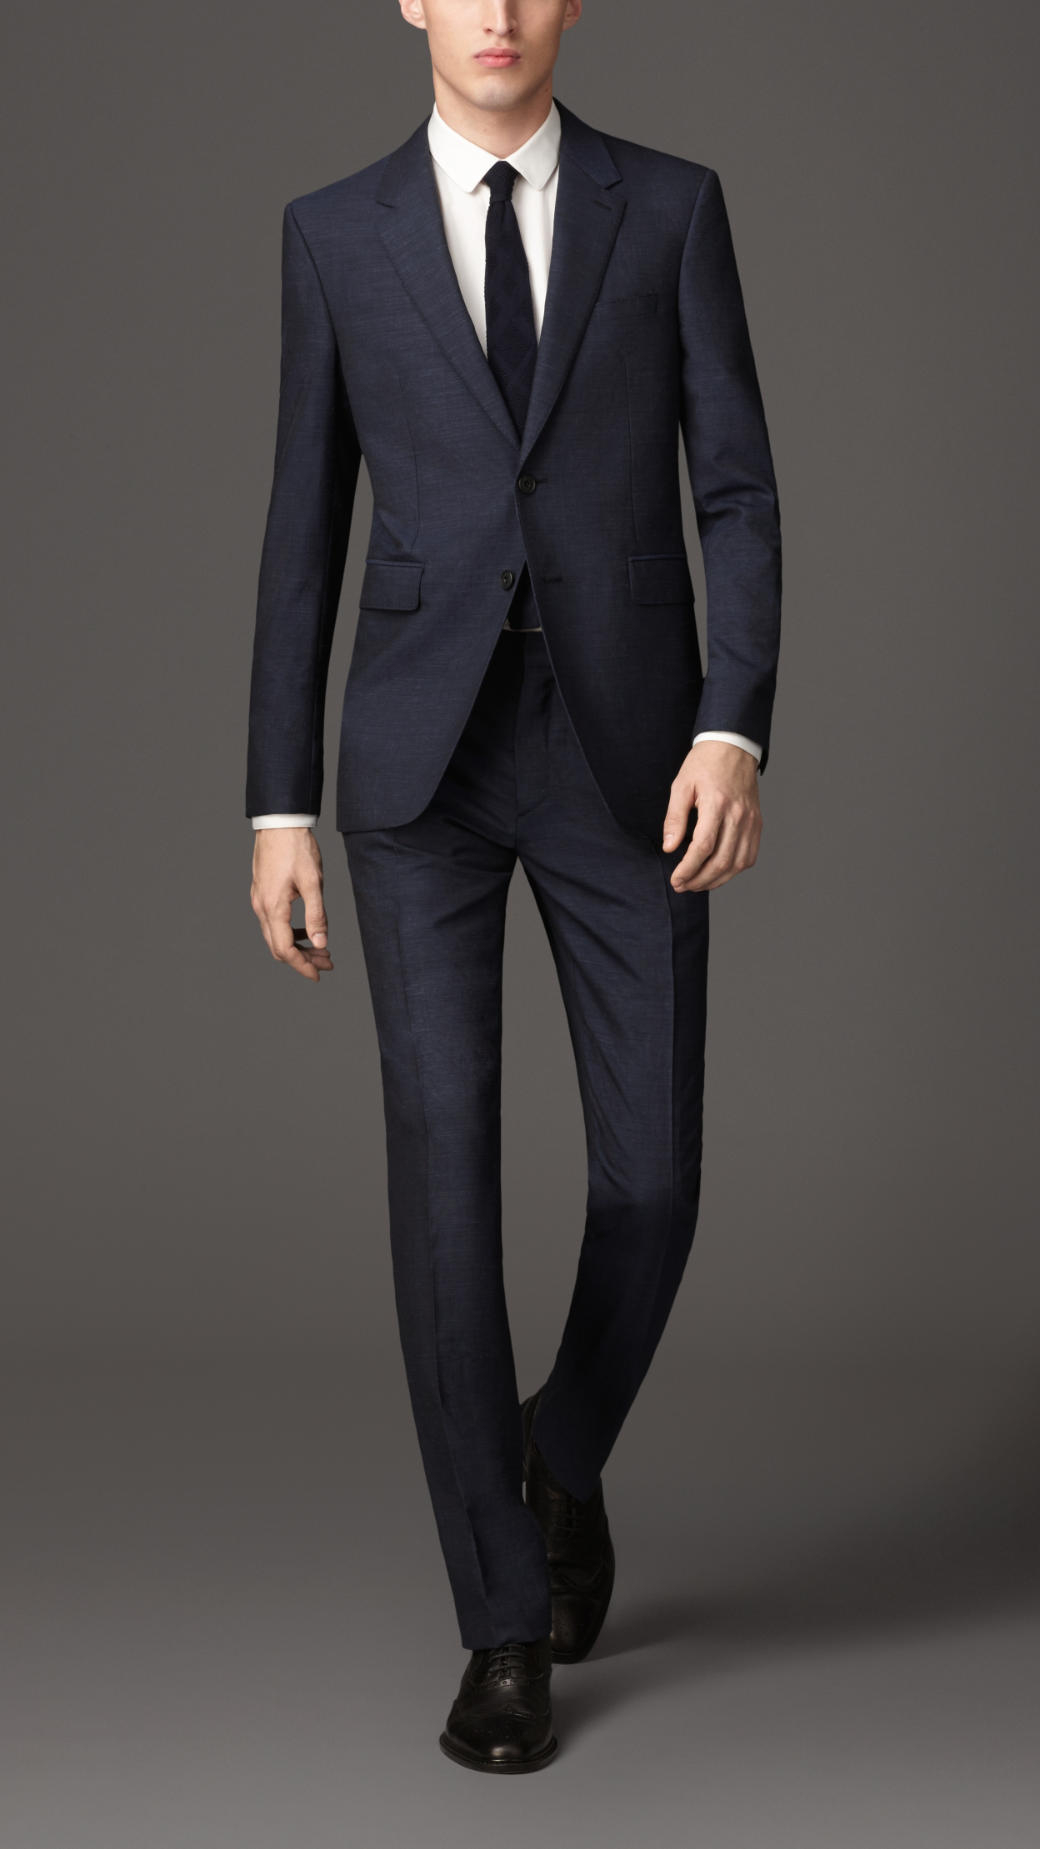 Lyst - Burberry Modern Fit Wool Linen Suit in Blue for Men